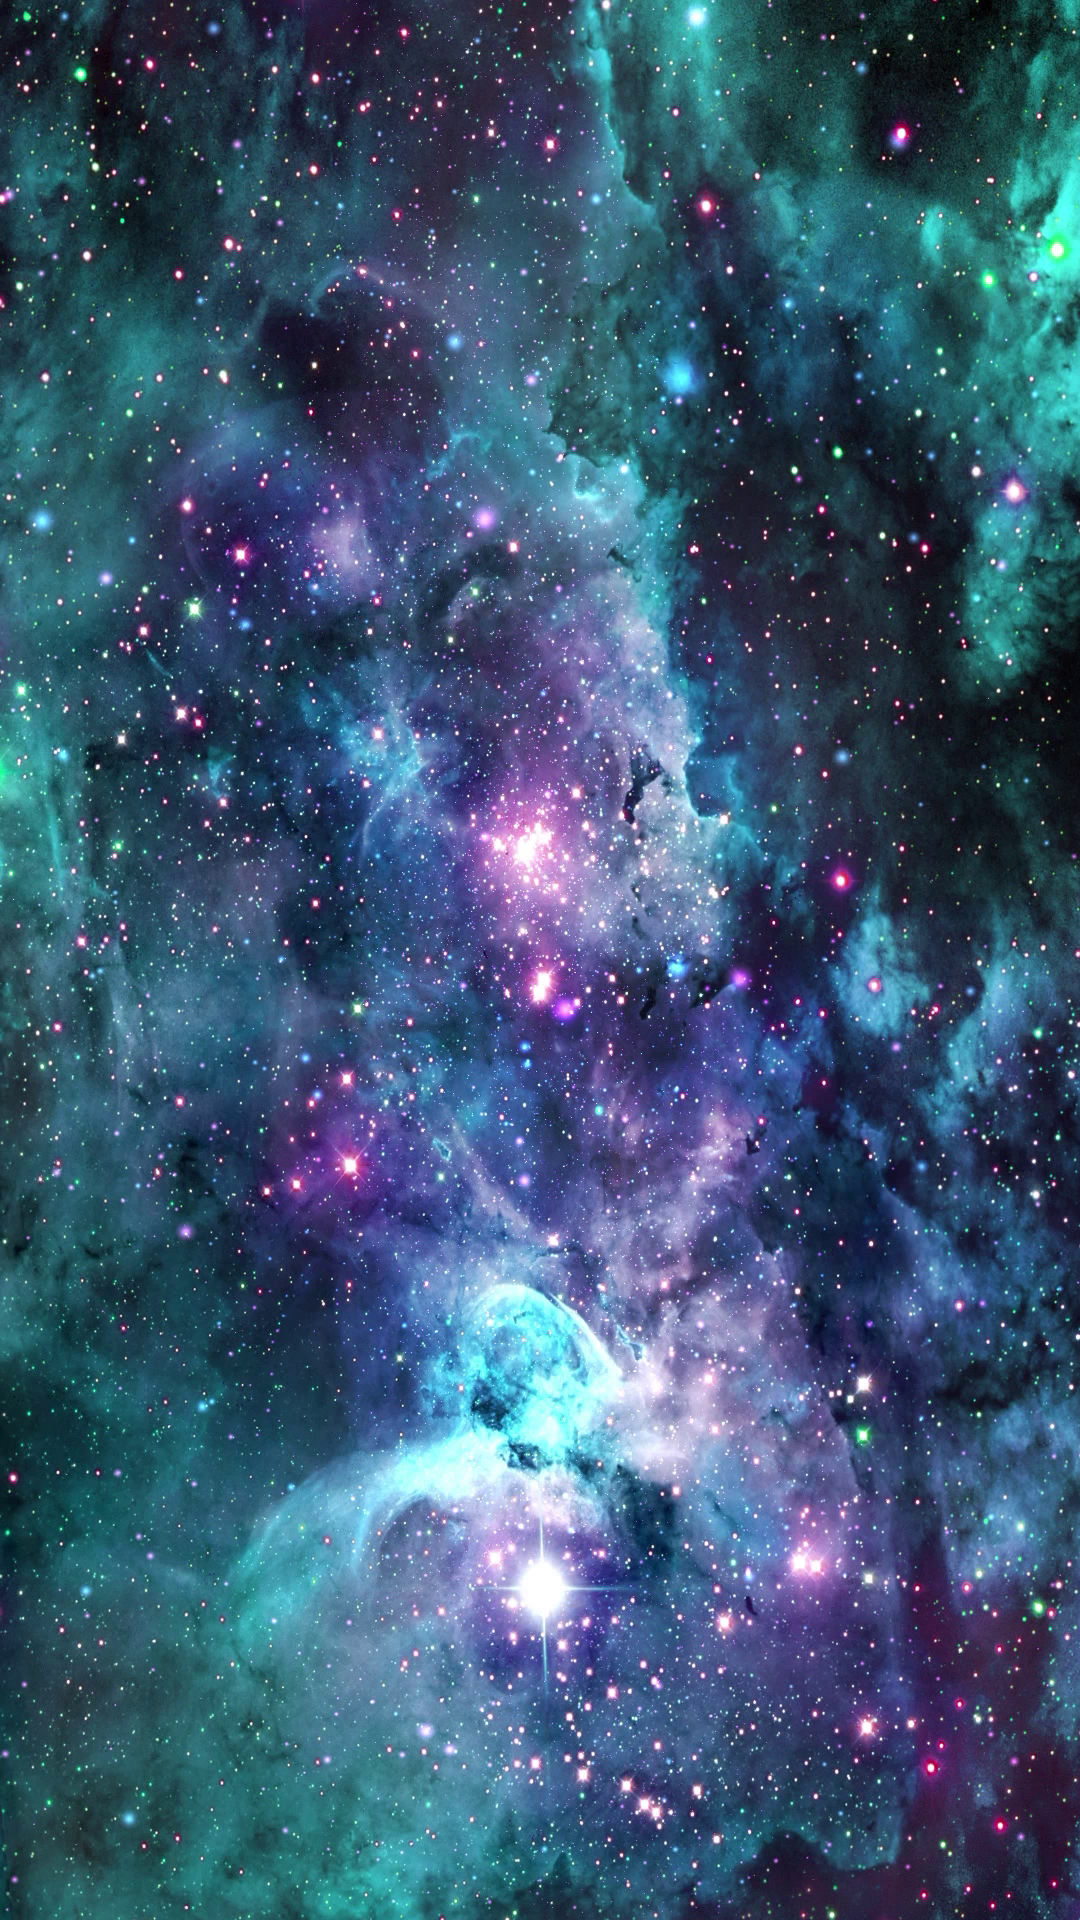 [42+] Live Astronomy Wallpaper | WallpaperSafari.com